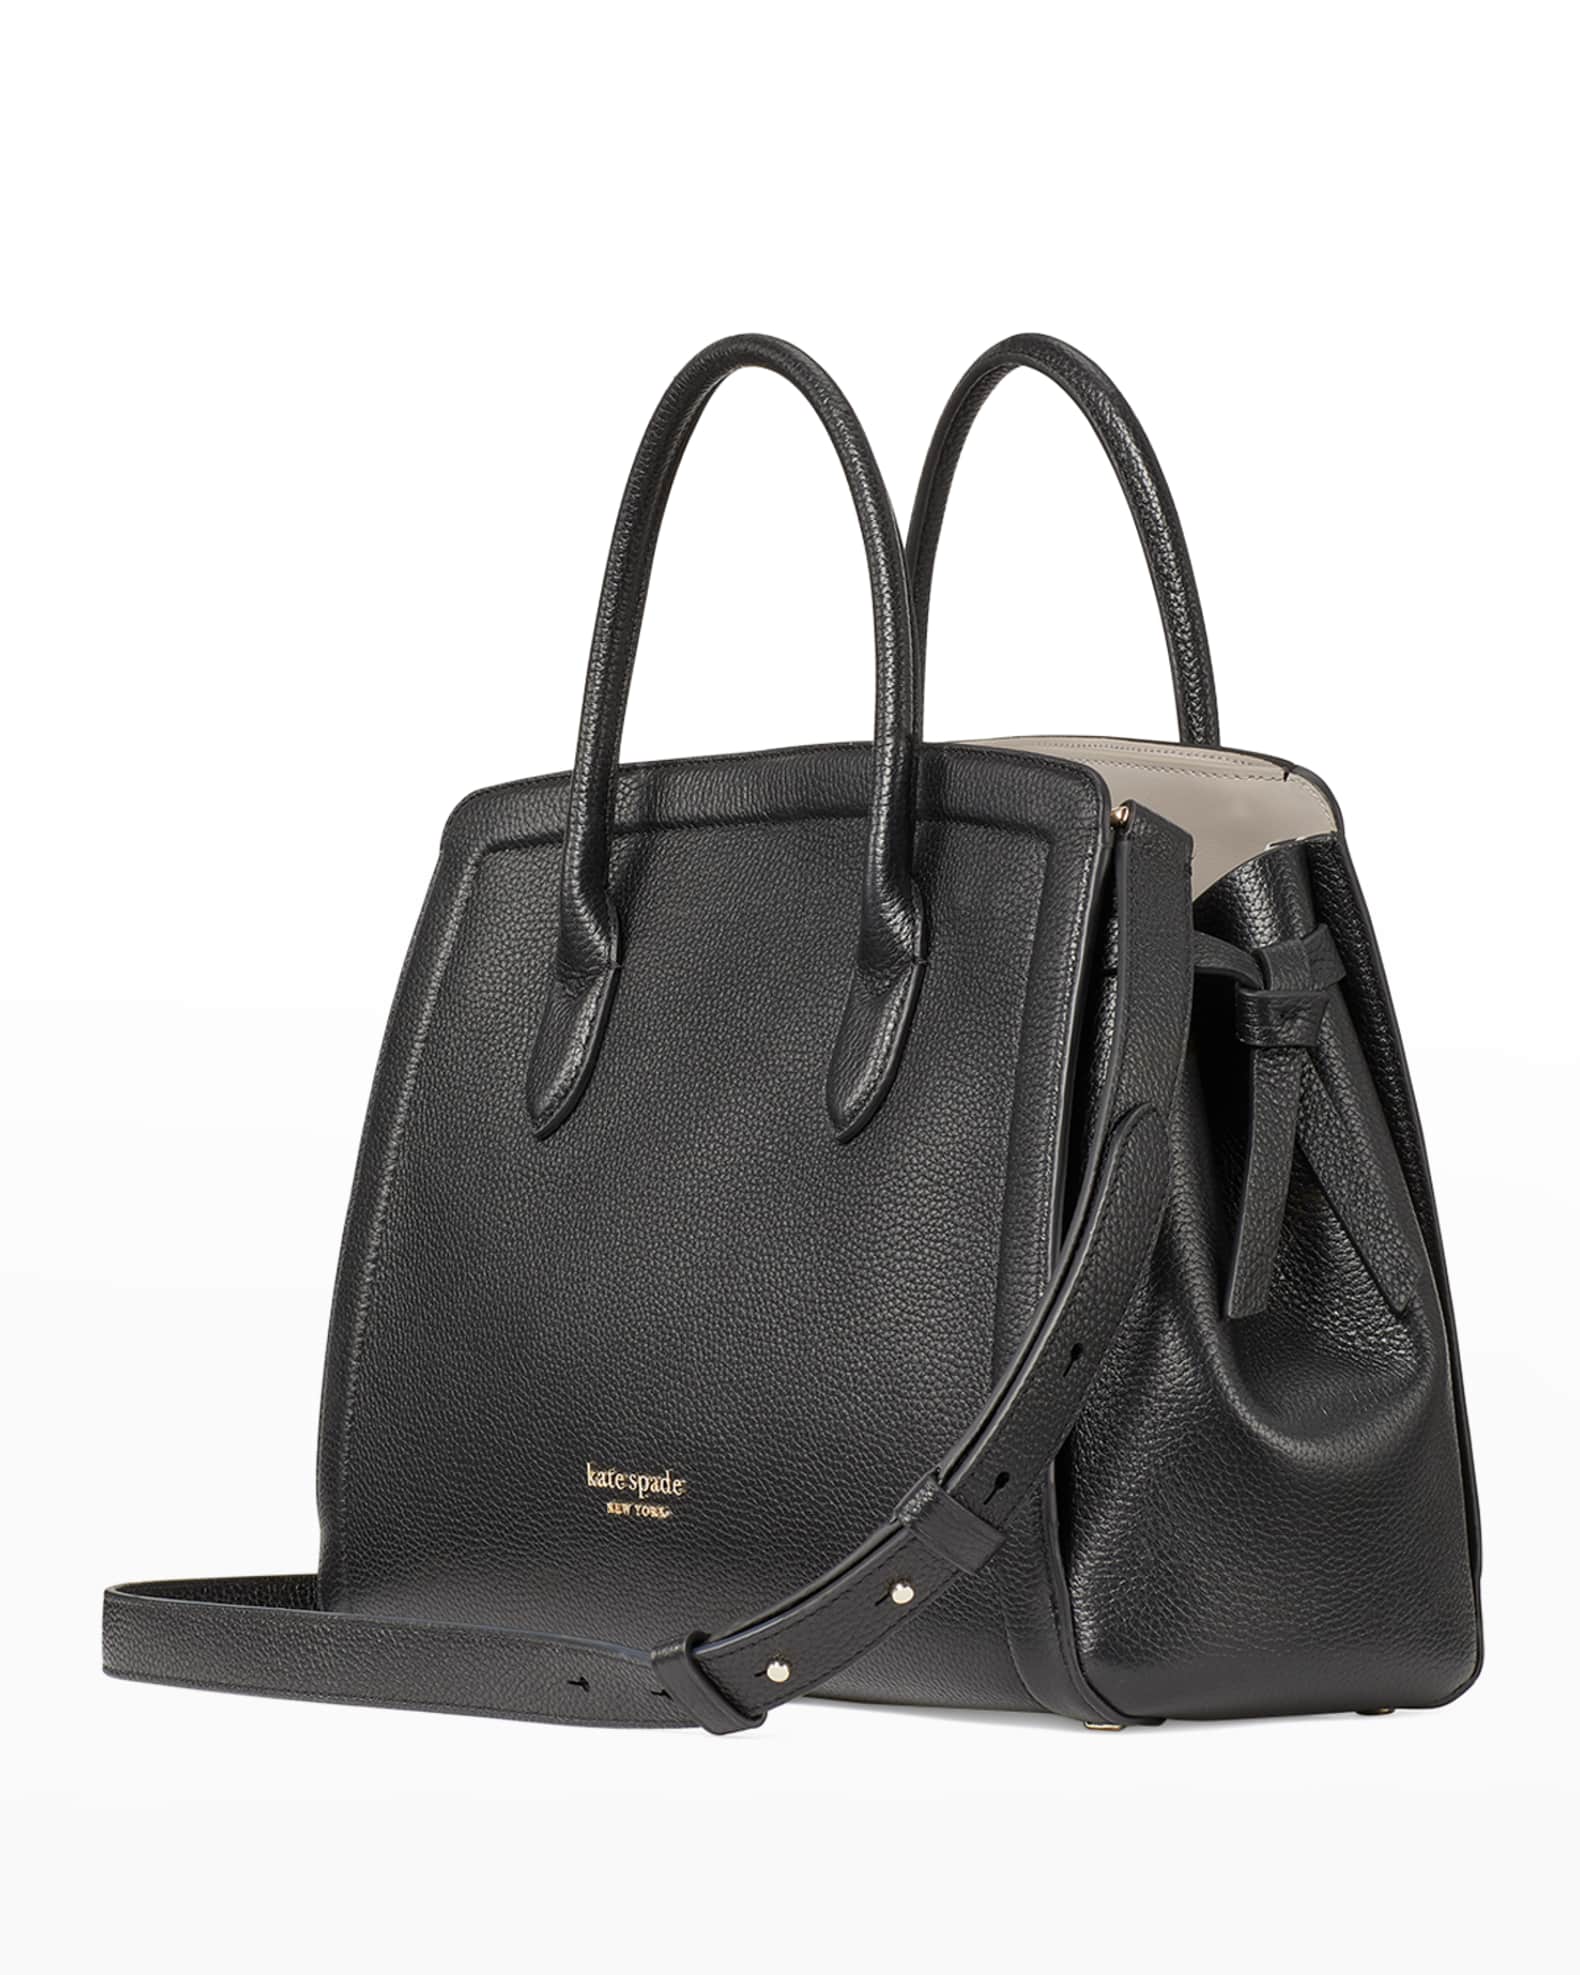 kate spade new york knott large leather satchel bag | Neiman Marcus